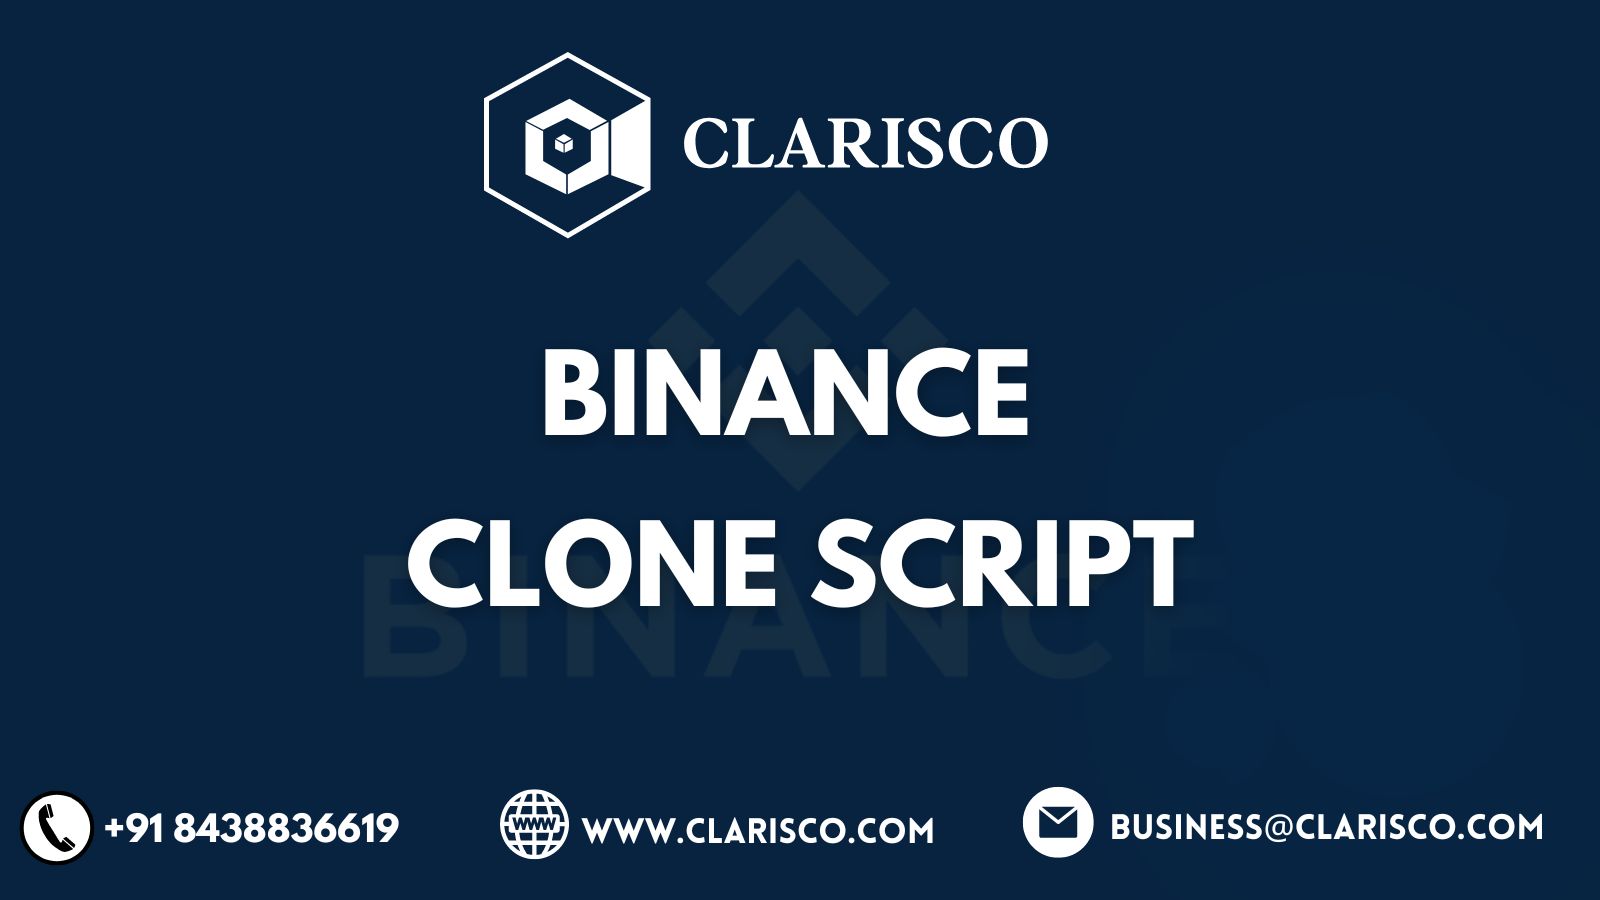 Binance Clone Script | Clarisco Solutions